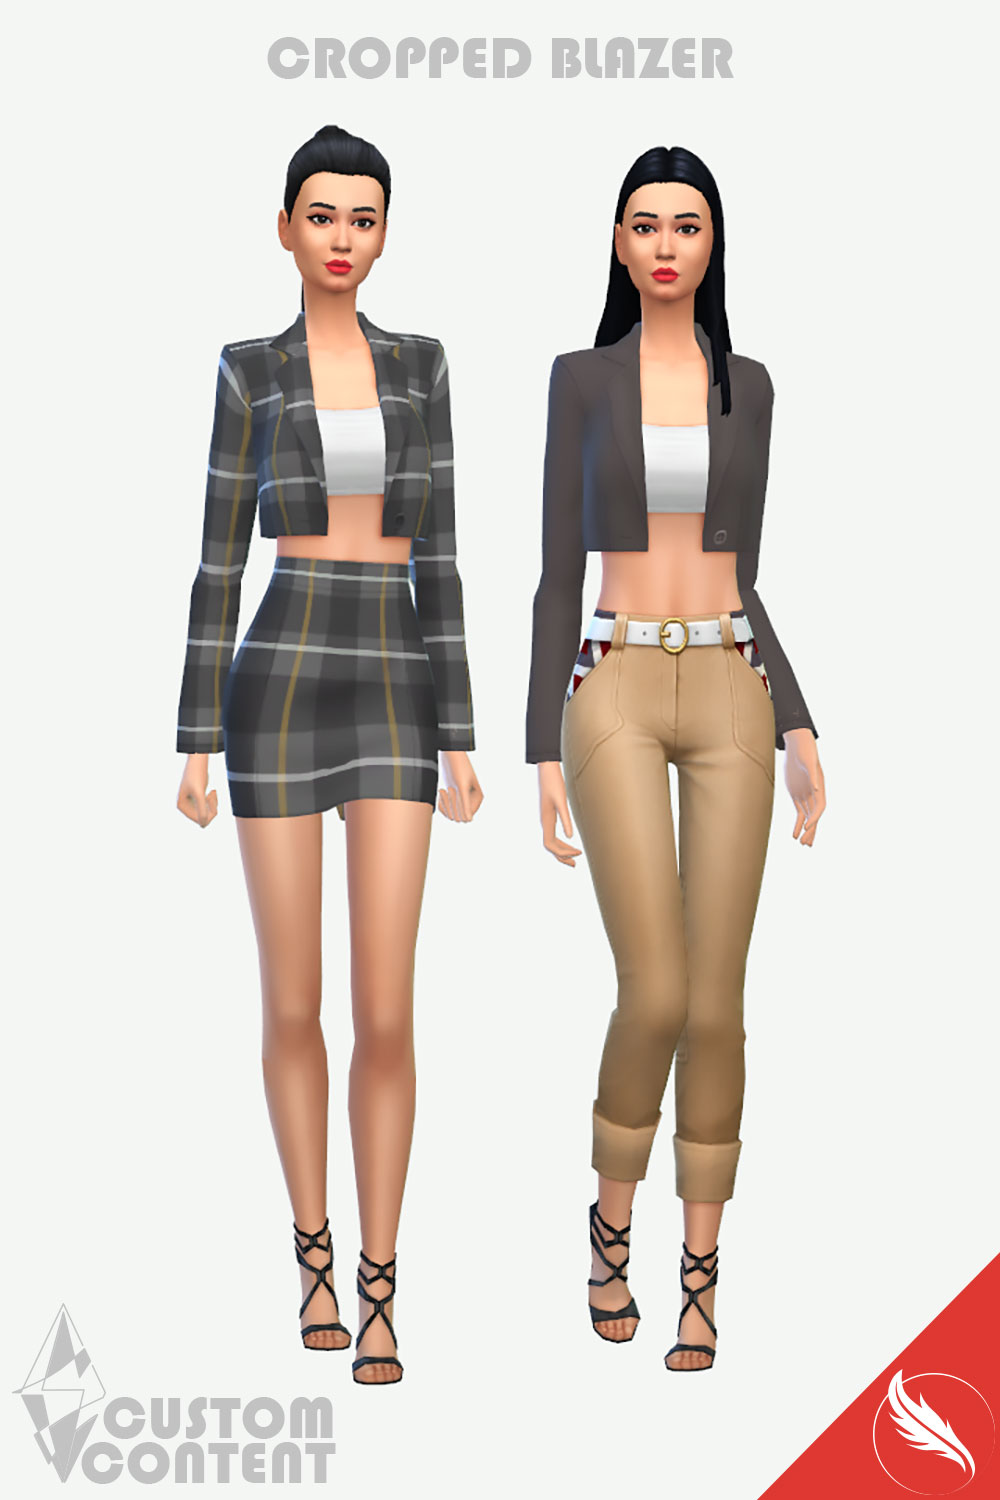 The Sims 4 Cropped Blazer CC